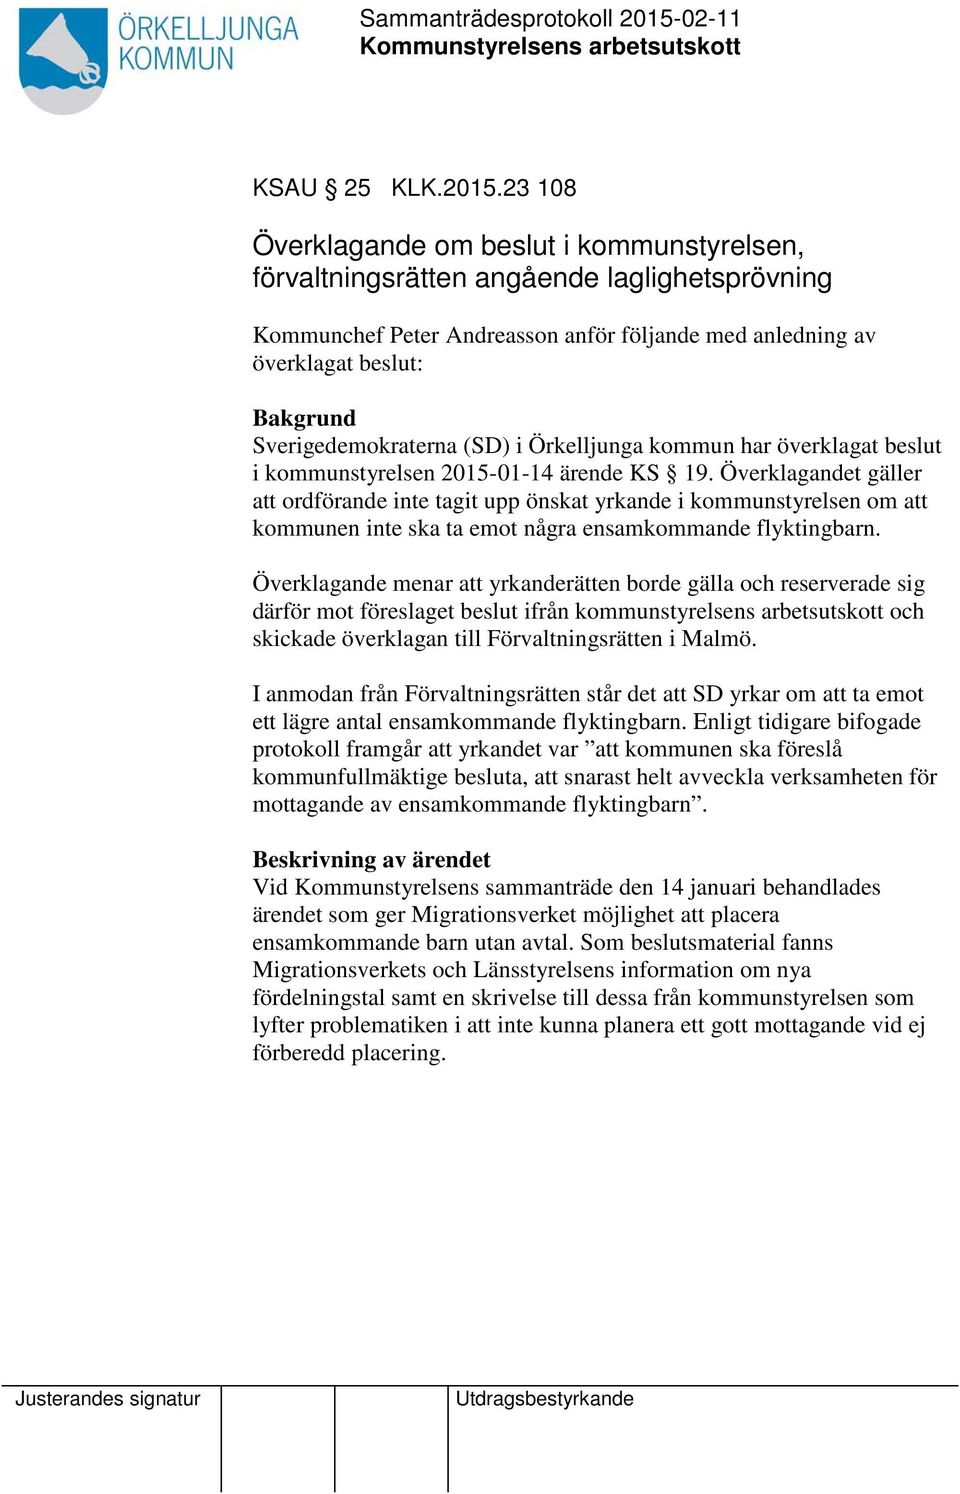 Sverigedemokraterna (SD) i Örkelljunga kommun har överklagat beslut i kommunstyrelsen 2015-01-14 ärende KS 19.